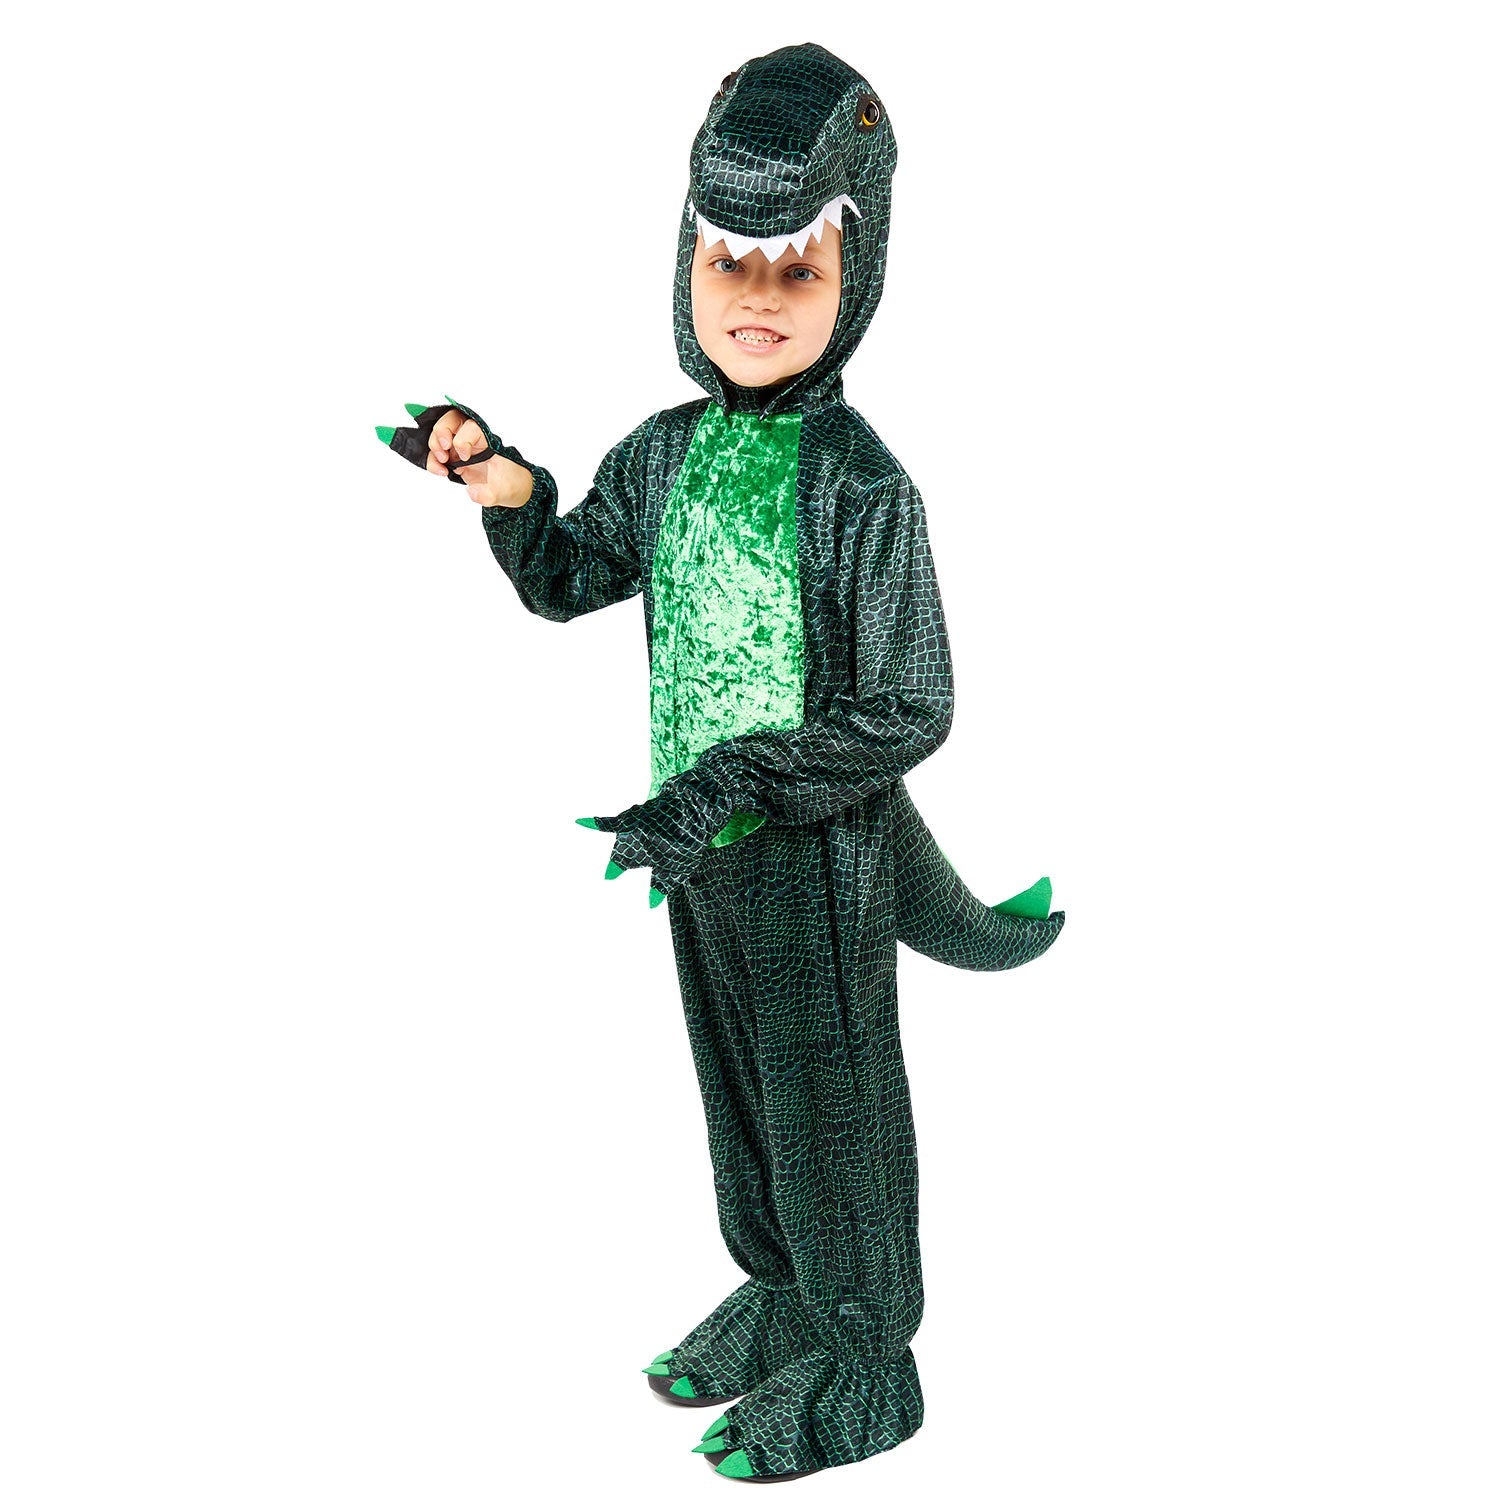 Dark Dino Costume includes jumpsuit and headpiece